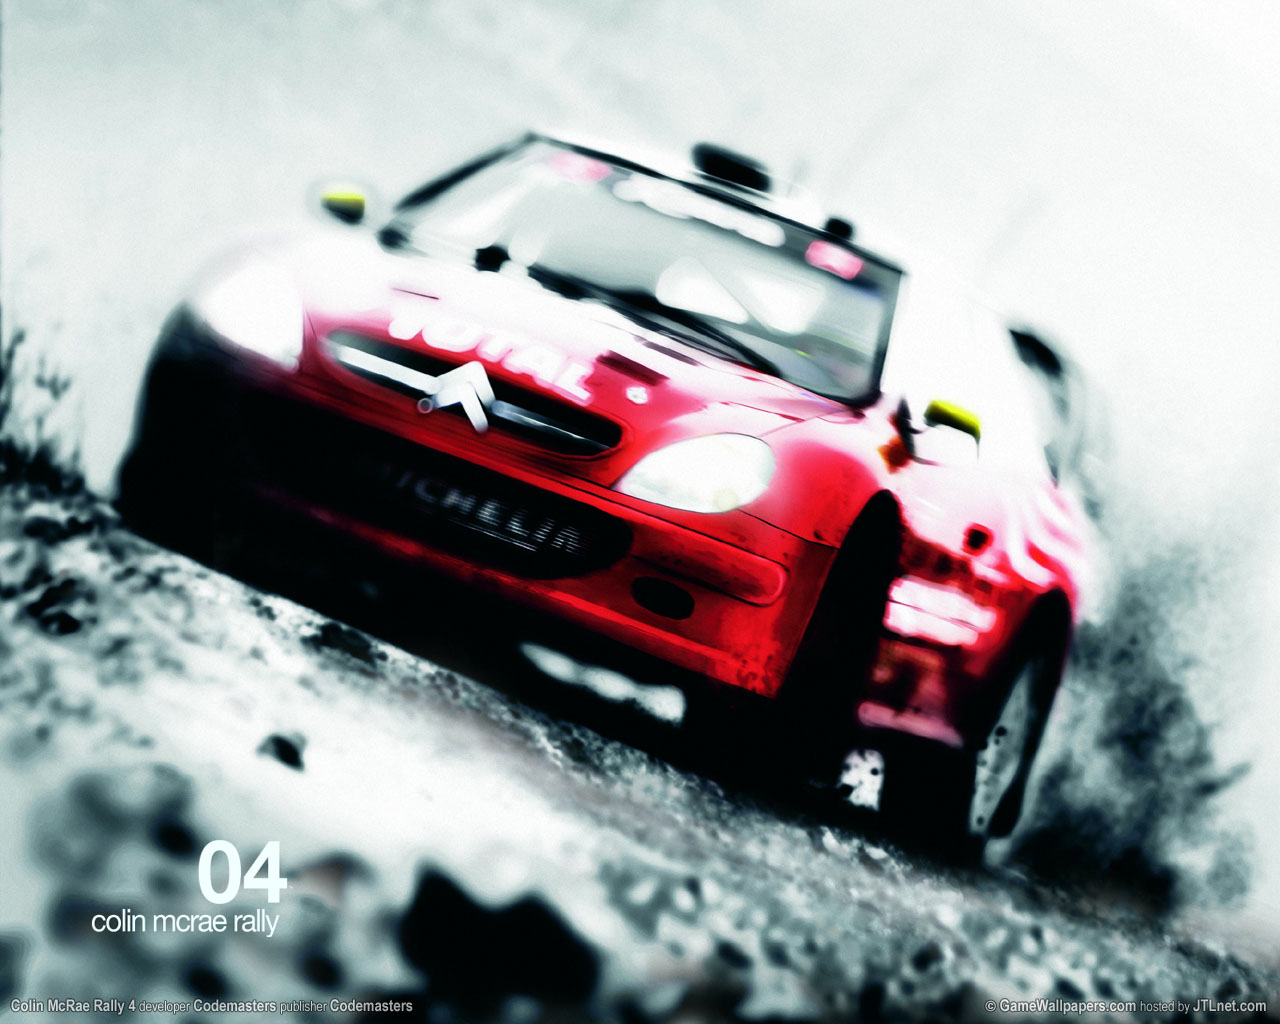 Colin McRae Rally 4 wallpaper 01 1280x1024